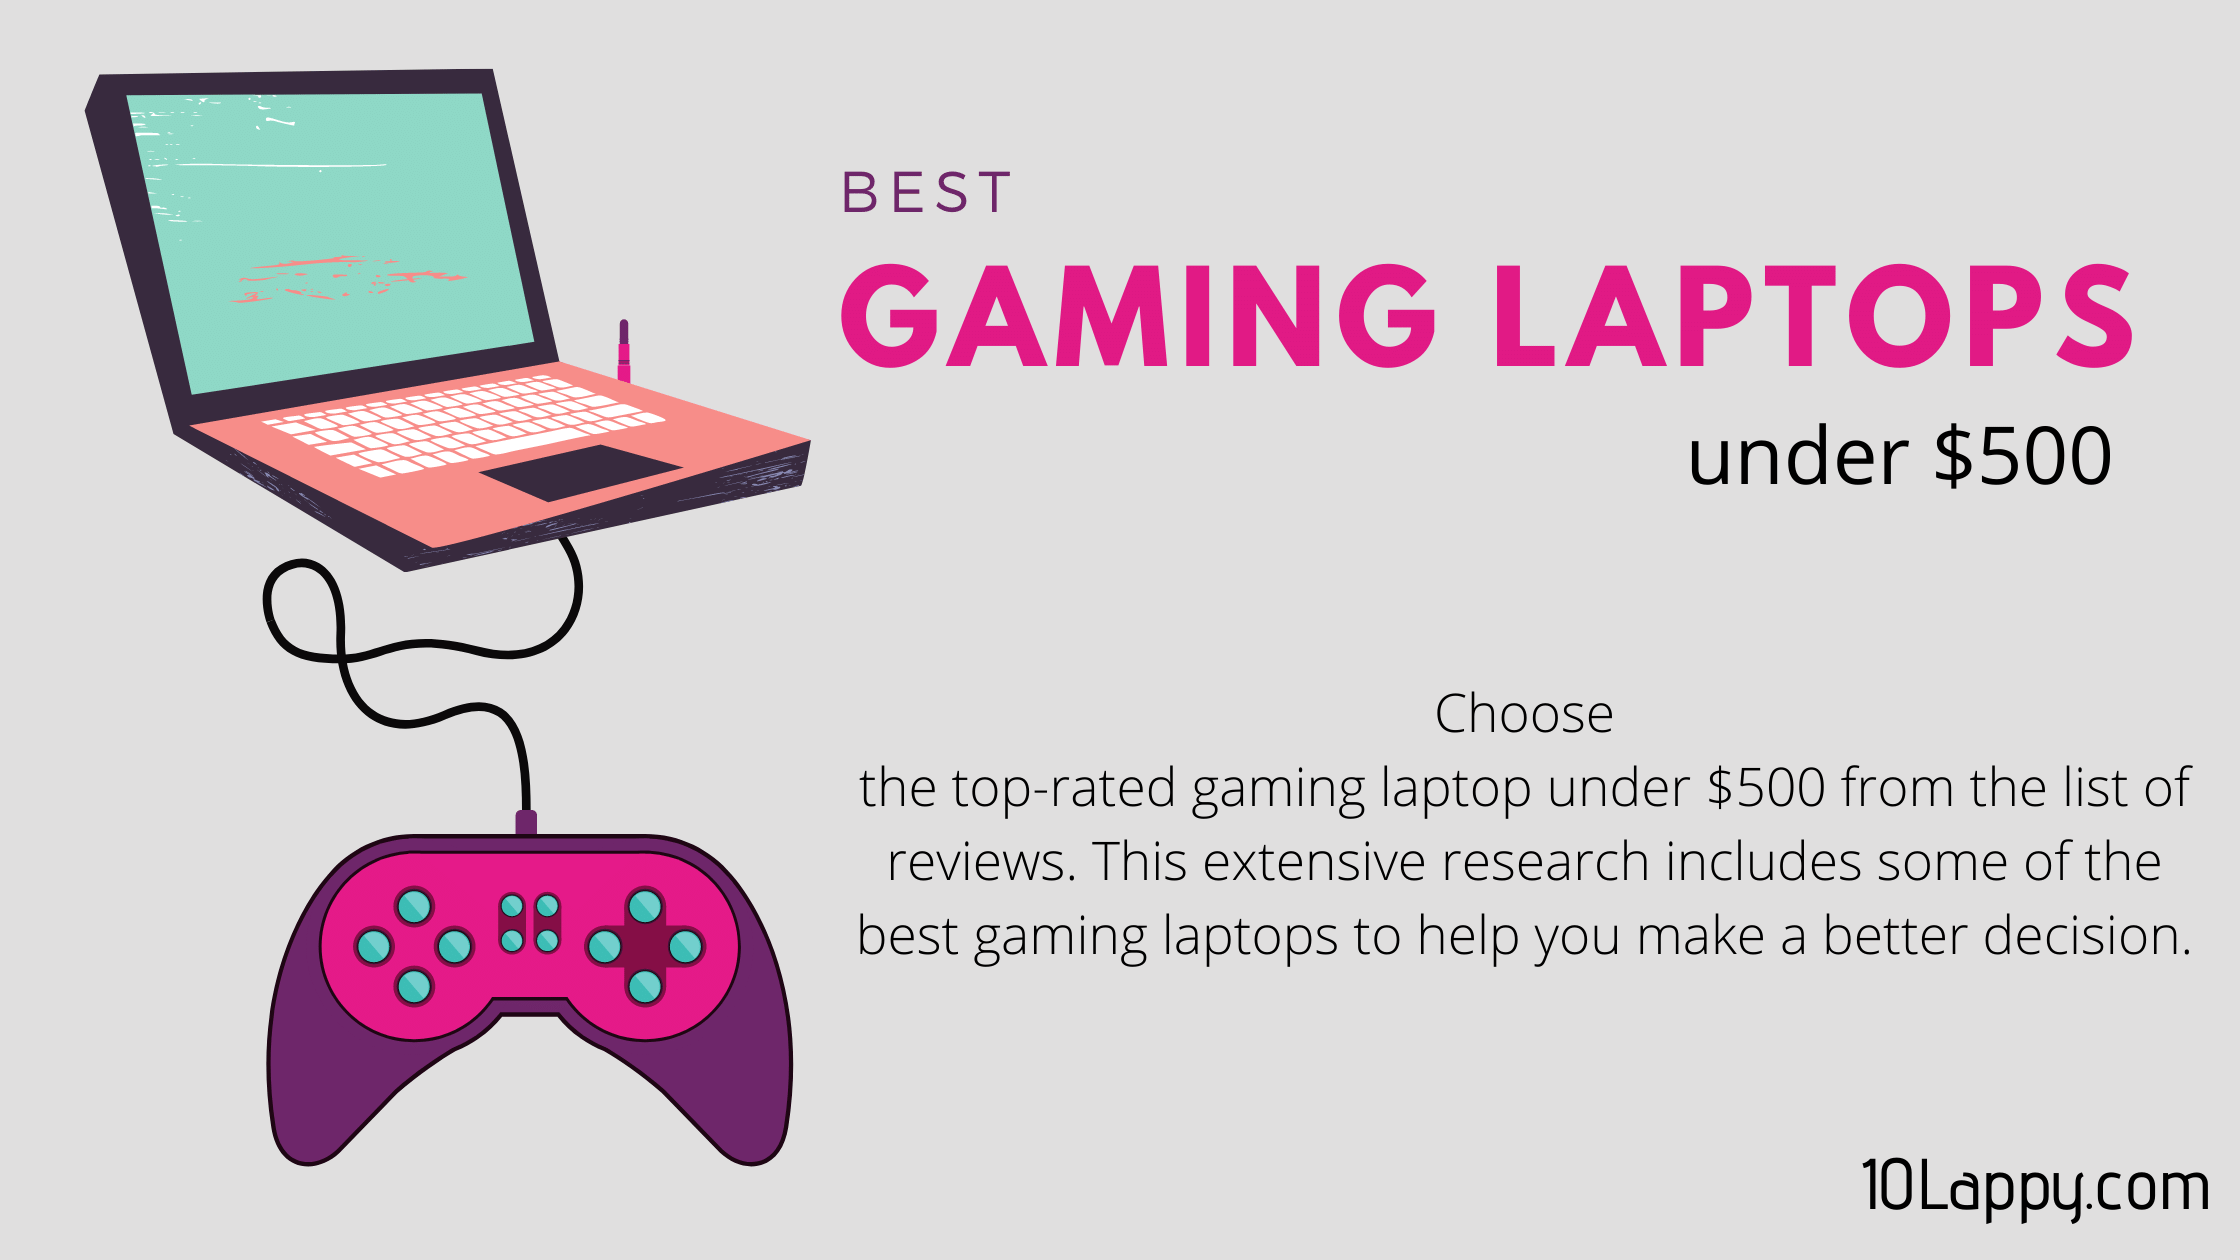 15 Best Gaming Laptops under 500 Dollars